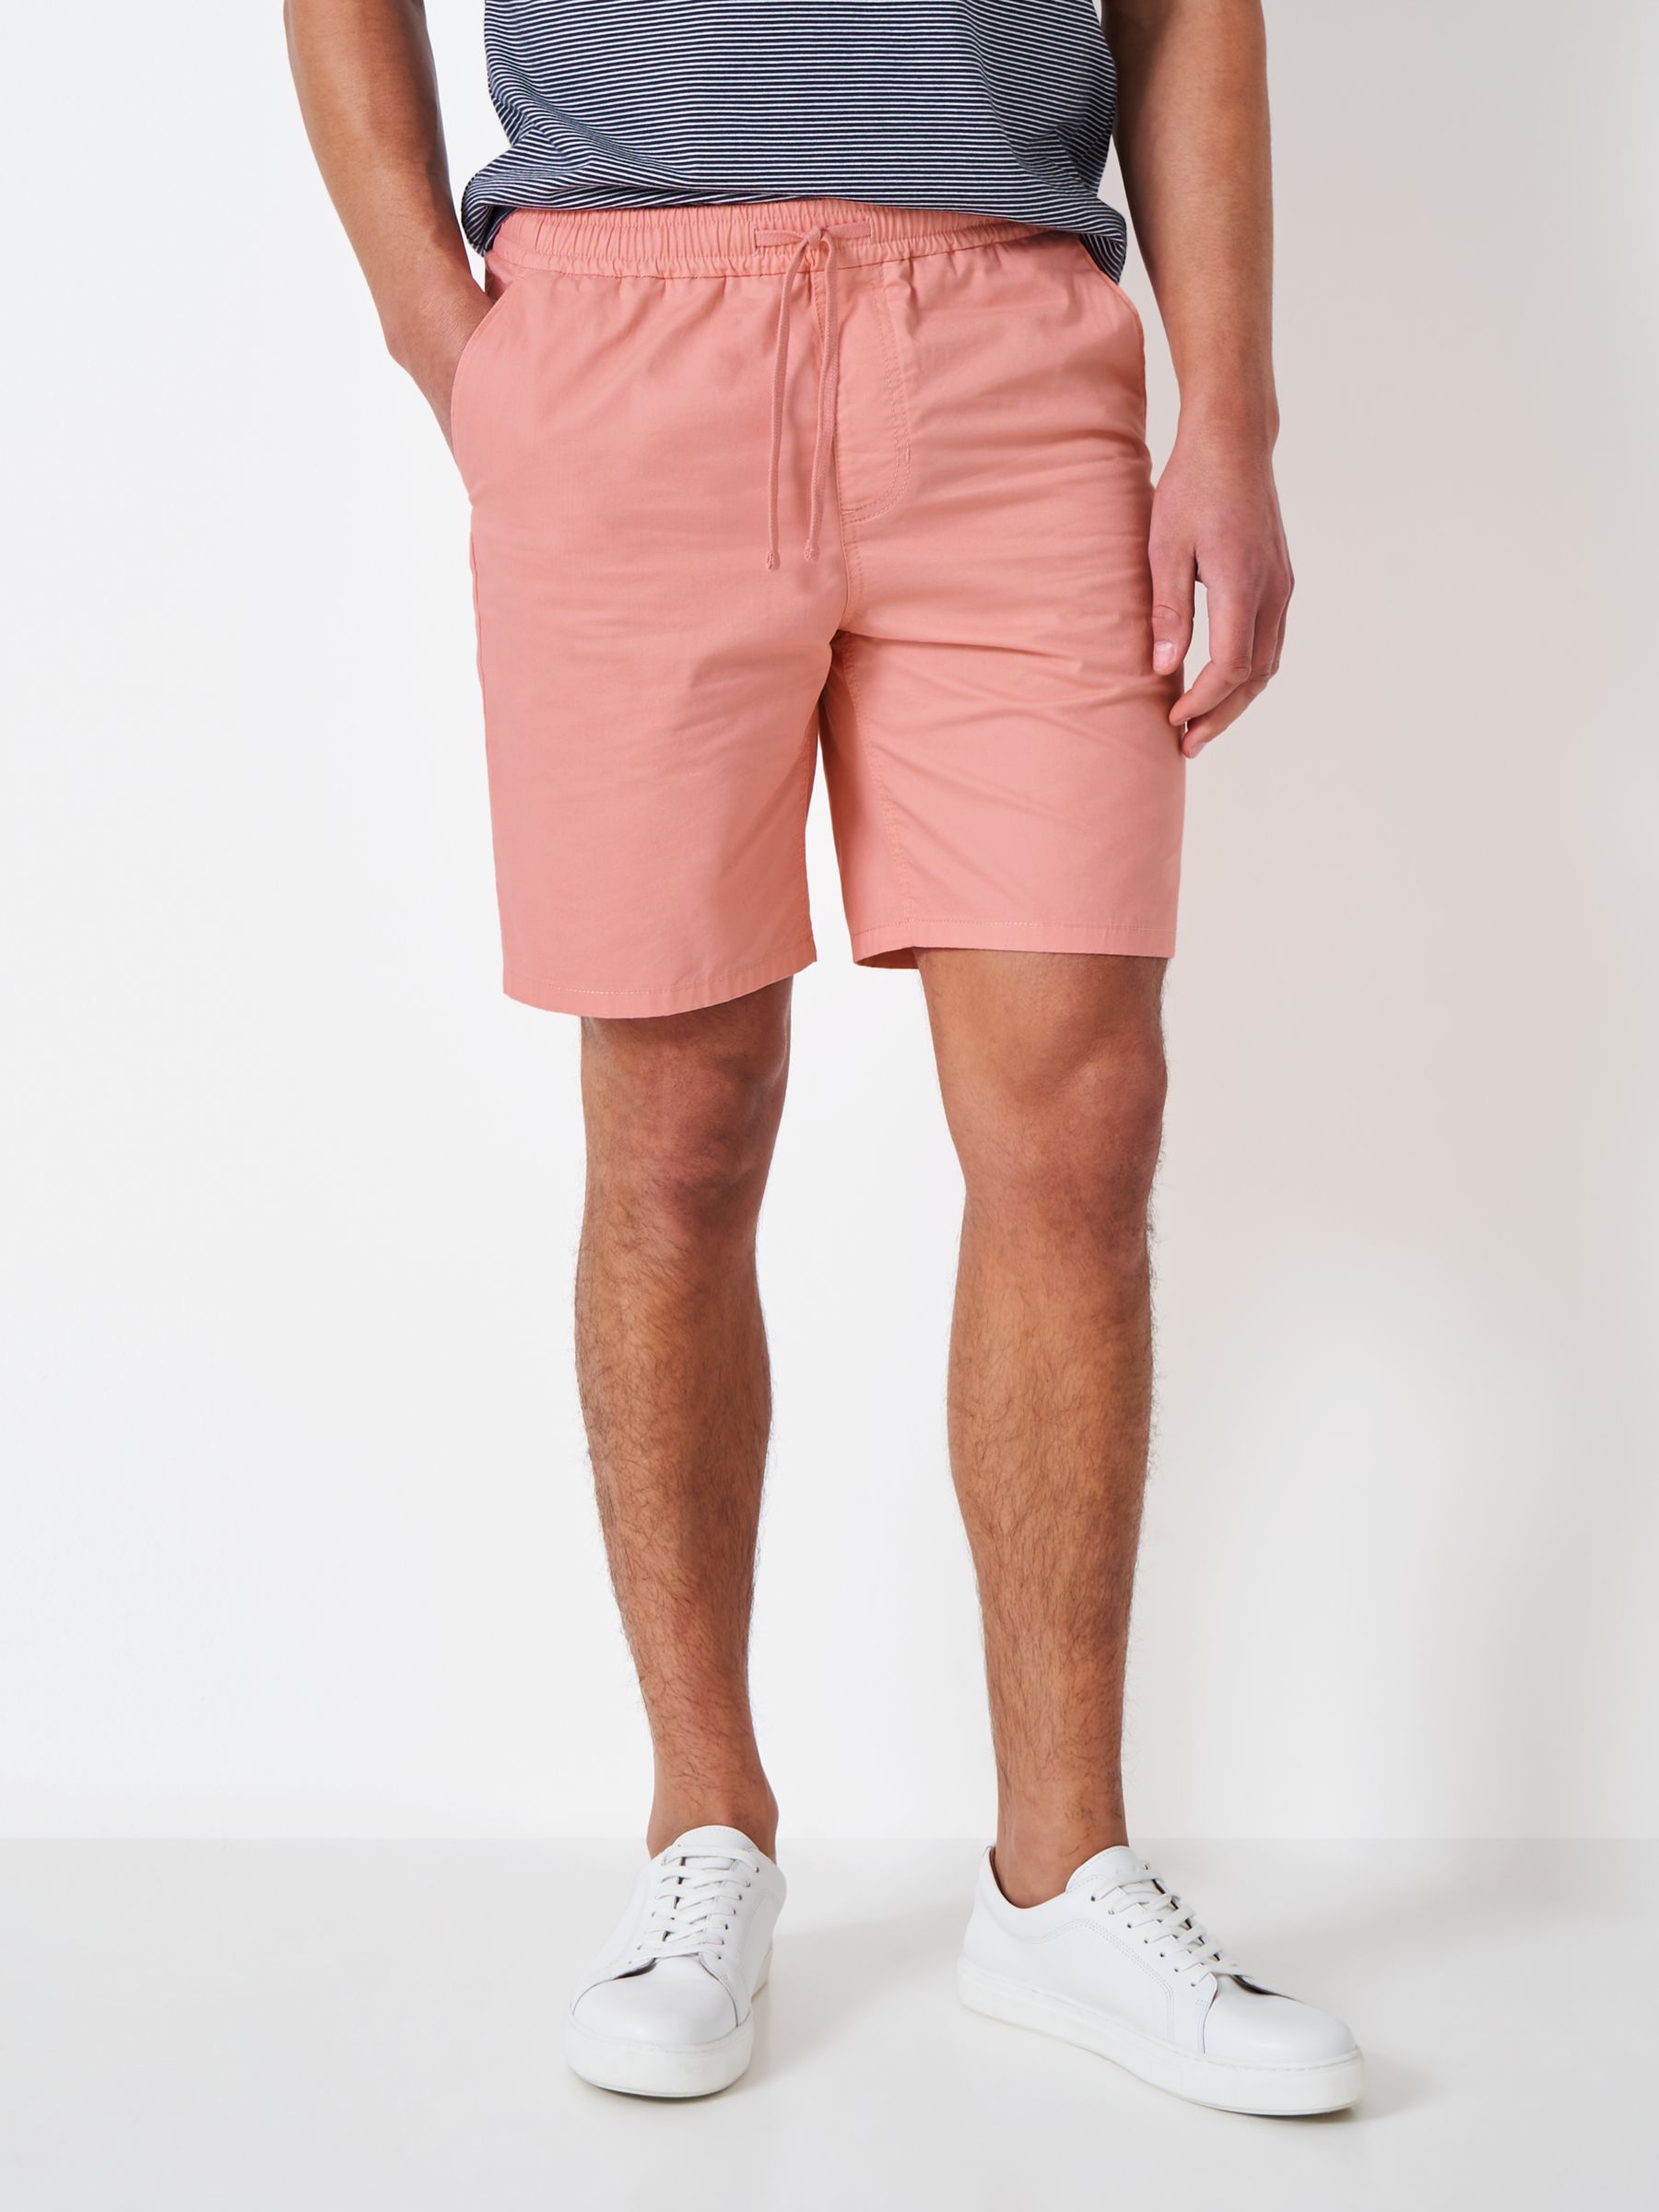 Men's Charles Tyrwhitt Cotton Shorts - Light Coral Pink Size 40 Linen